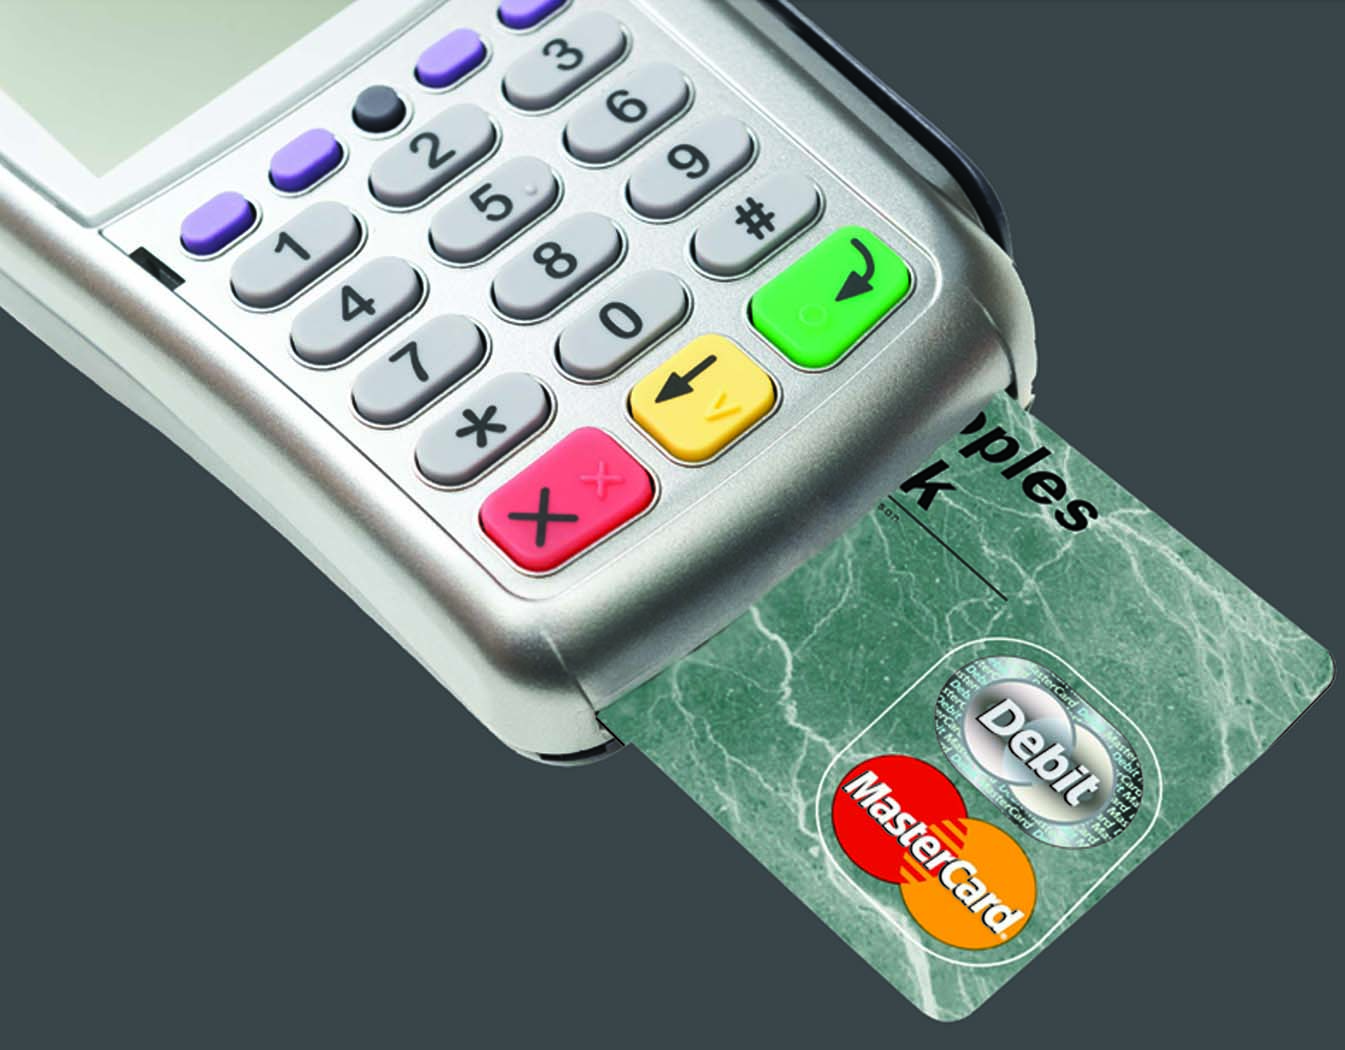 Using an EMV Debit Card